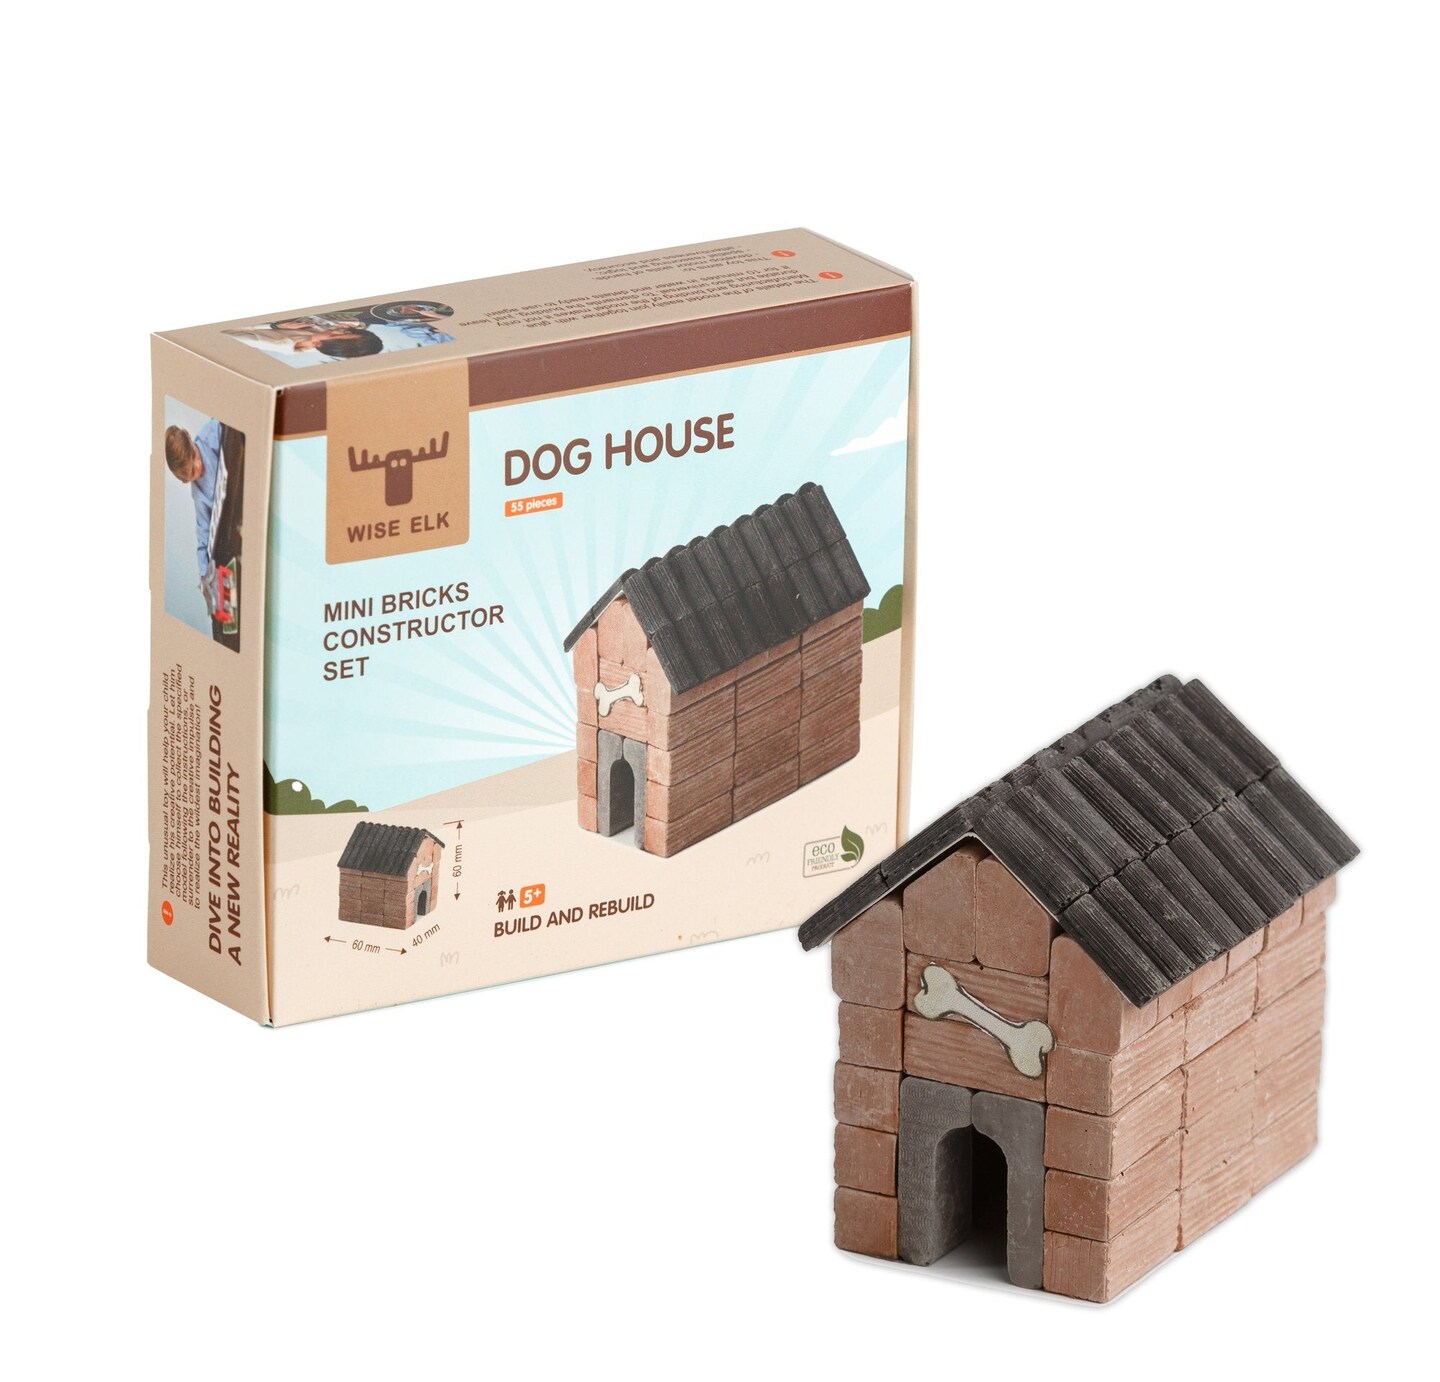 Mini Bricks Construction Set - Dog House